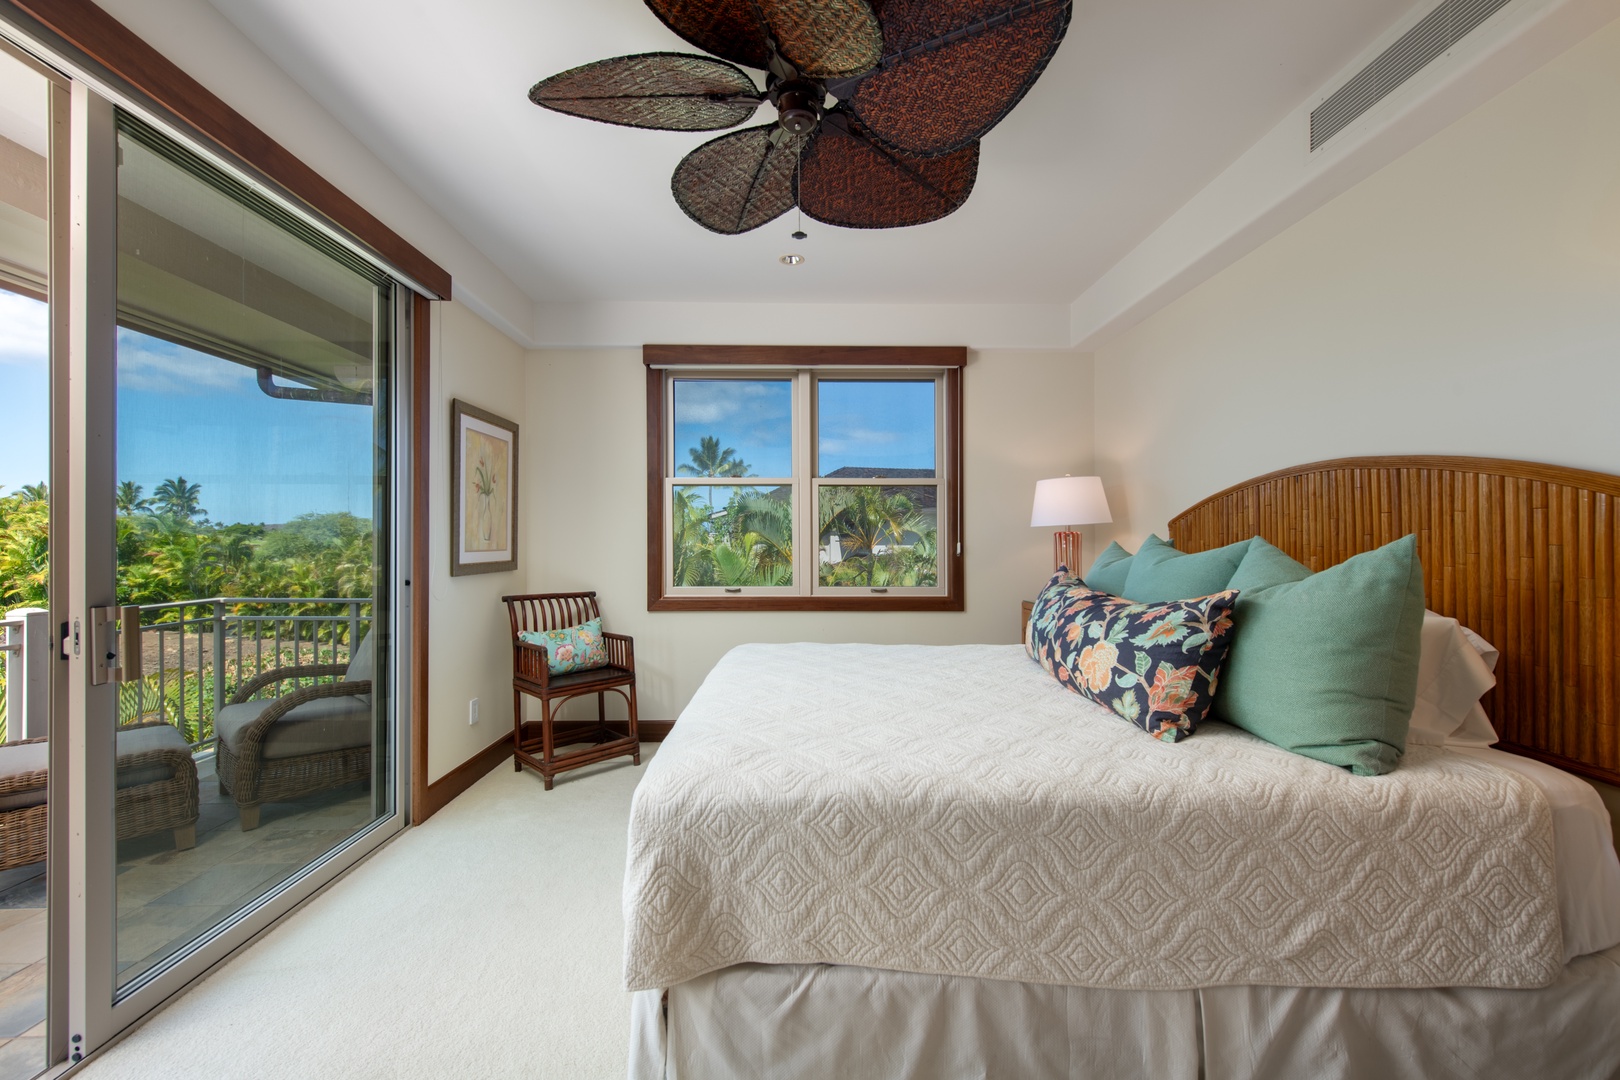 Kailua Kona Vacation Rentals, 3BD Ka'Ulu Villa (109A) at Four Seasons Resort at Hualalai - Downstairs primary bedroom suite with private deck, flat screen TV, sliding doors to bonus retreat room, and en-suite bath.